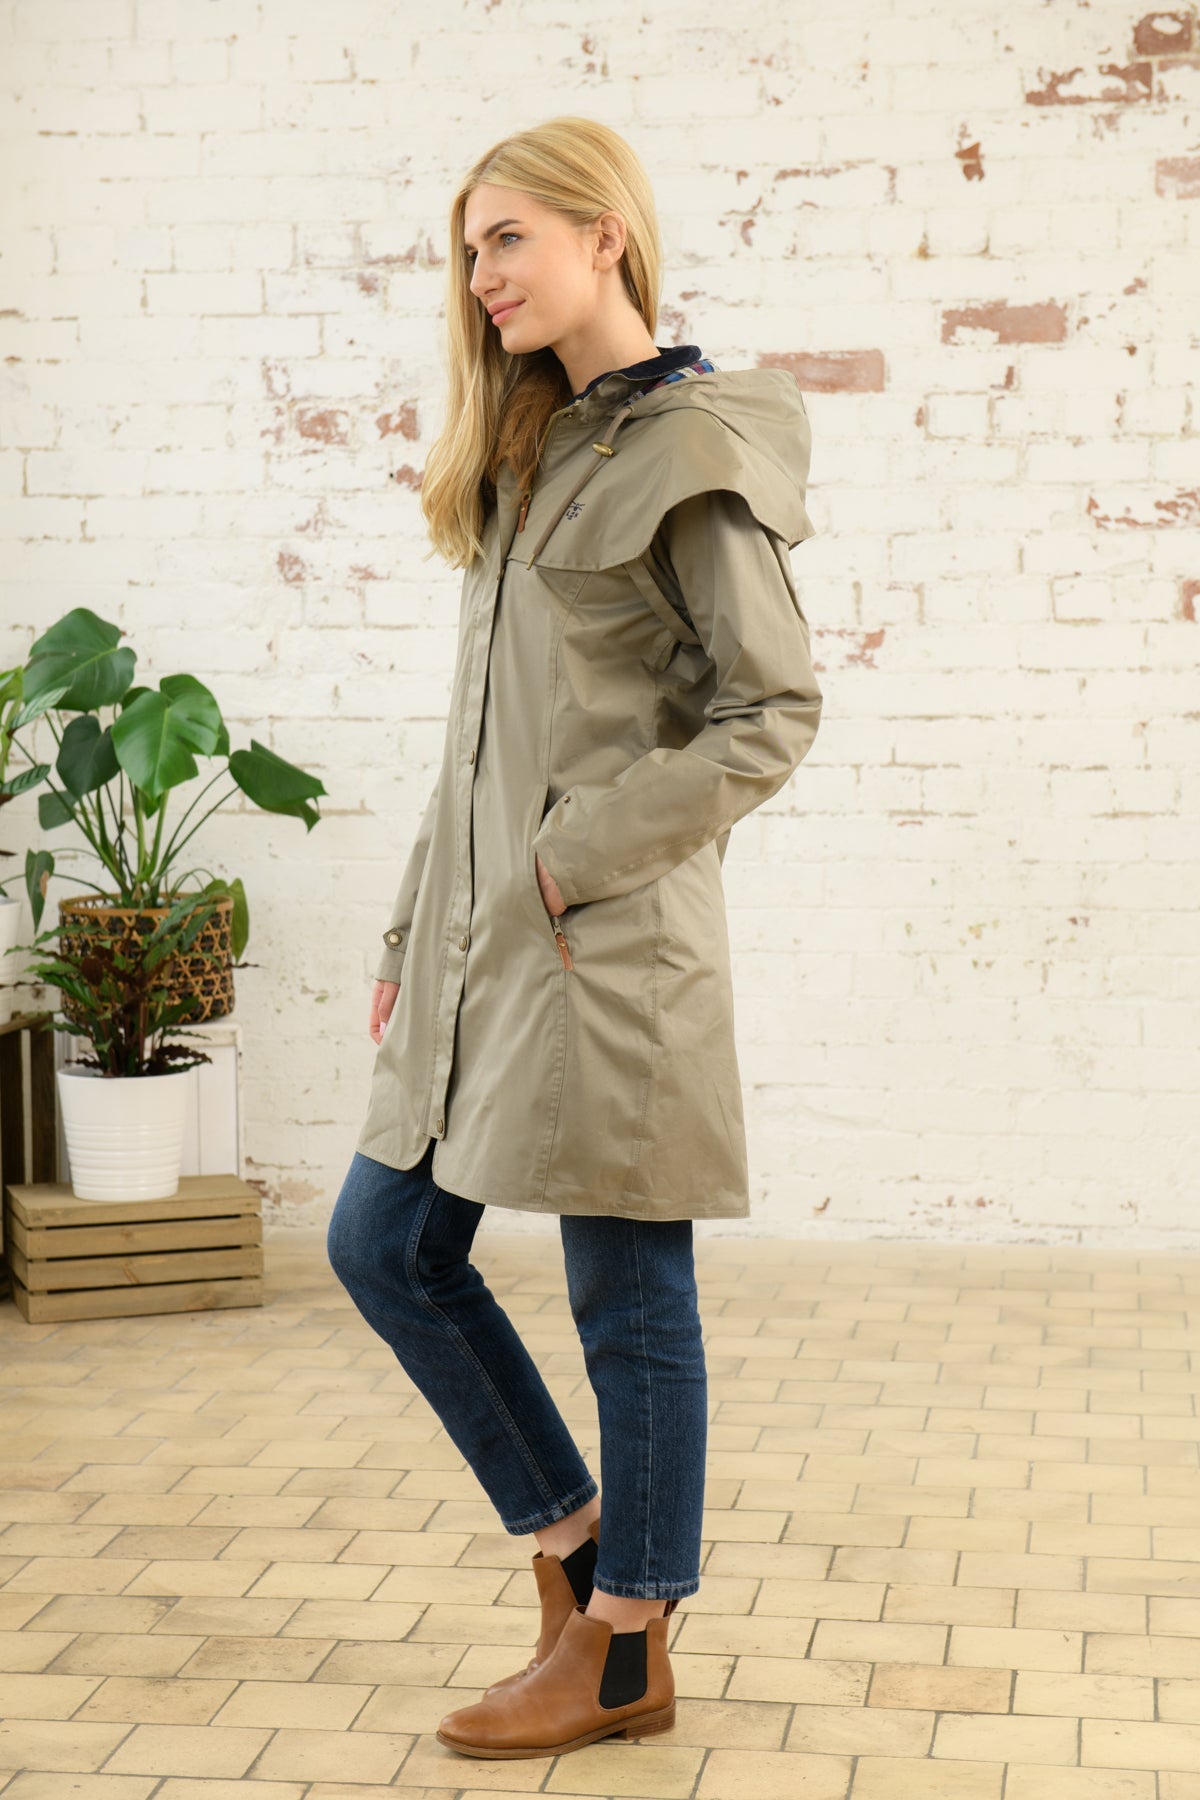 Clothing & Shoes - Jackets & Coats - Coats & Parkas - Kim & Co